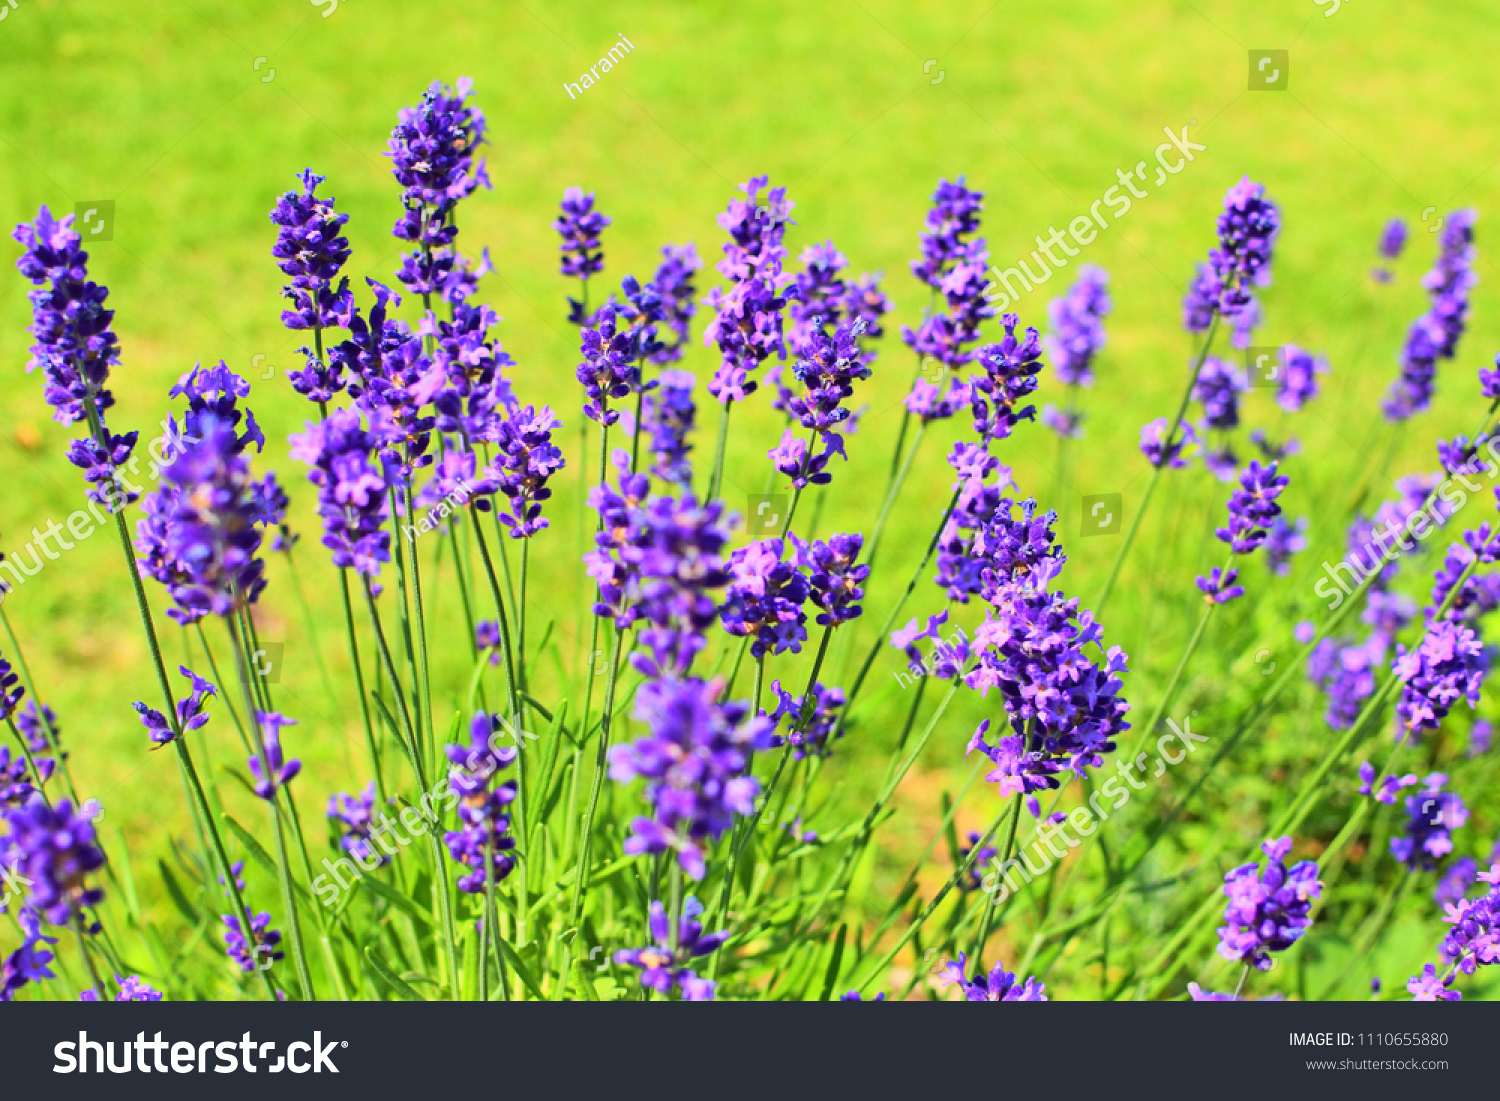 Purple lavender flowers in the garden #1110655880